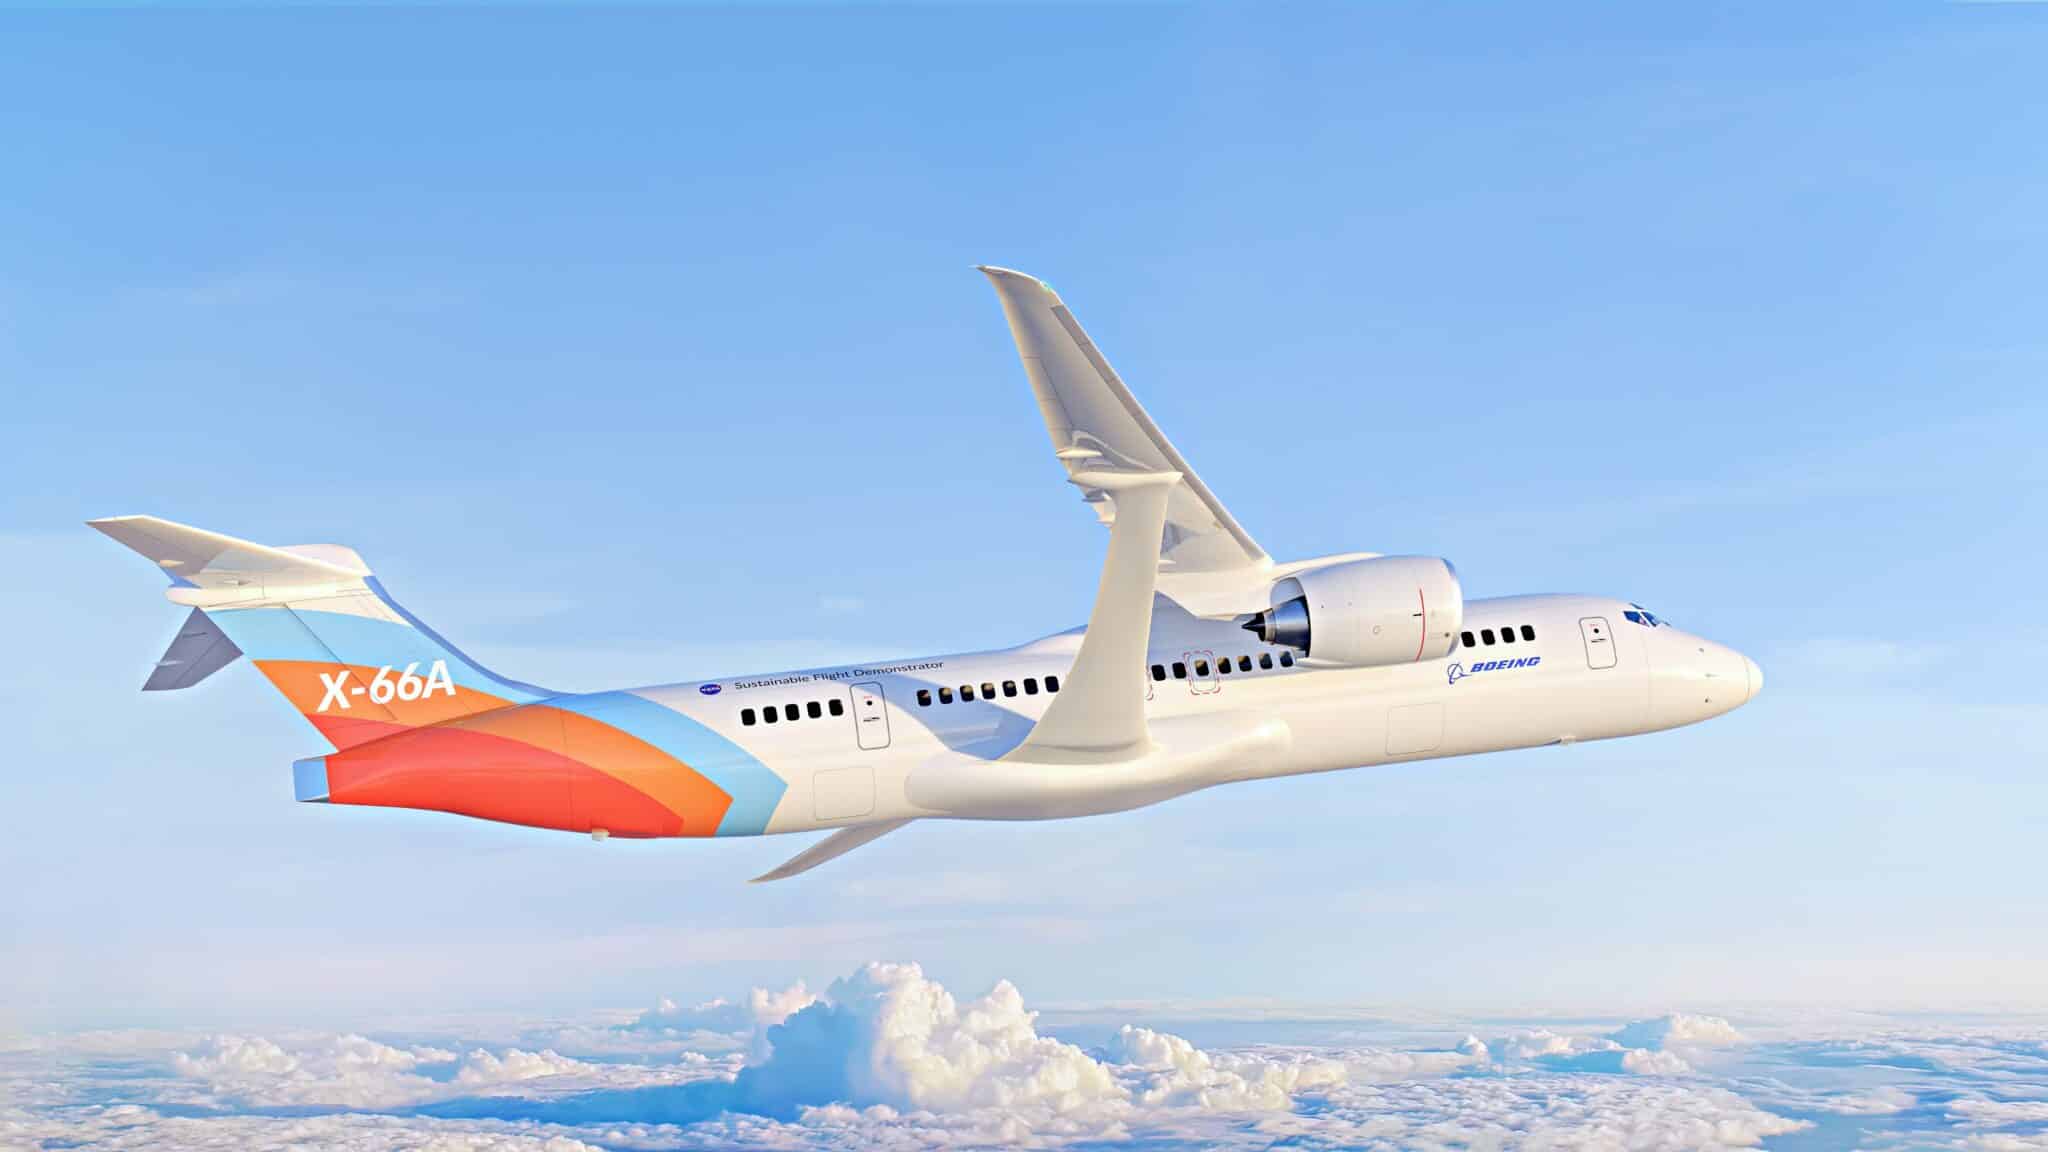 Boeing X-66A voo sustentável sustentabilidade